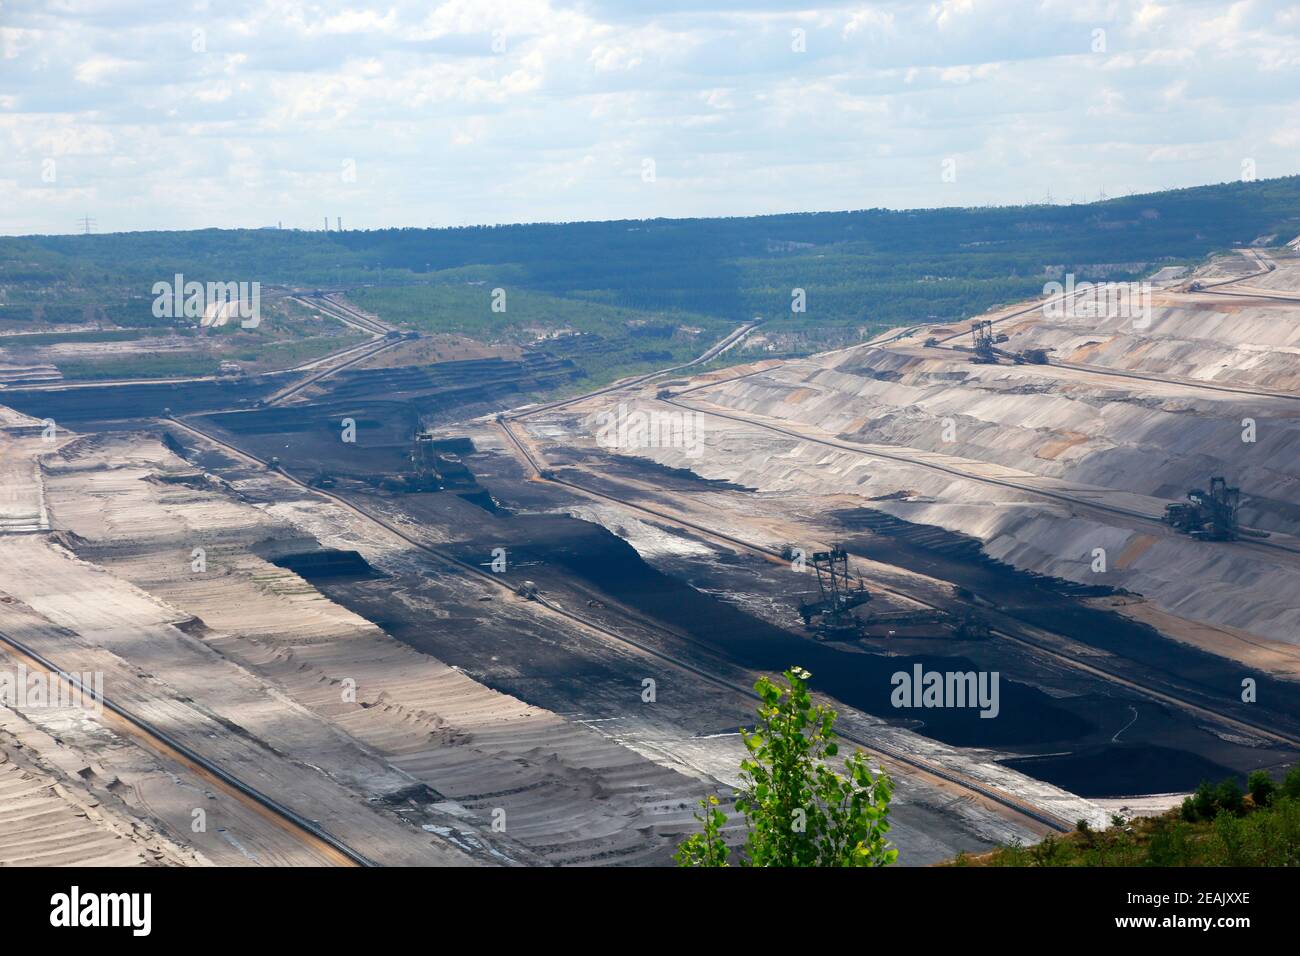 Inden opencast lignite mine in the Rhenish lignite mining area Stock Photo